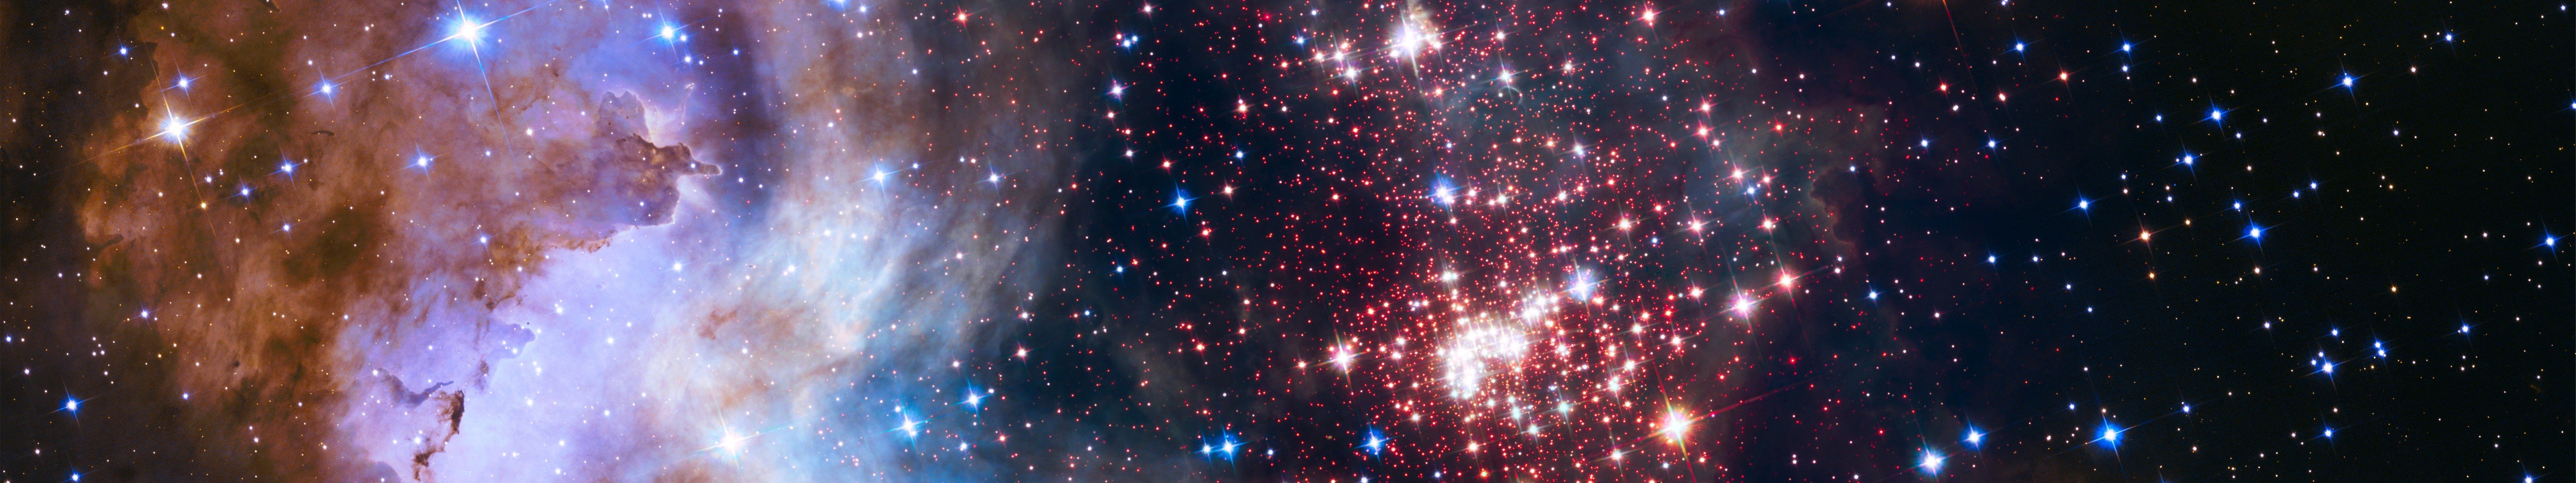 ESA, Space, Galaxy, Suns, Stars, Hubble Deep Field, Westerlund 2, Nebula, Multiple display, Triple screen Wallpaper